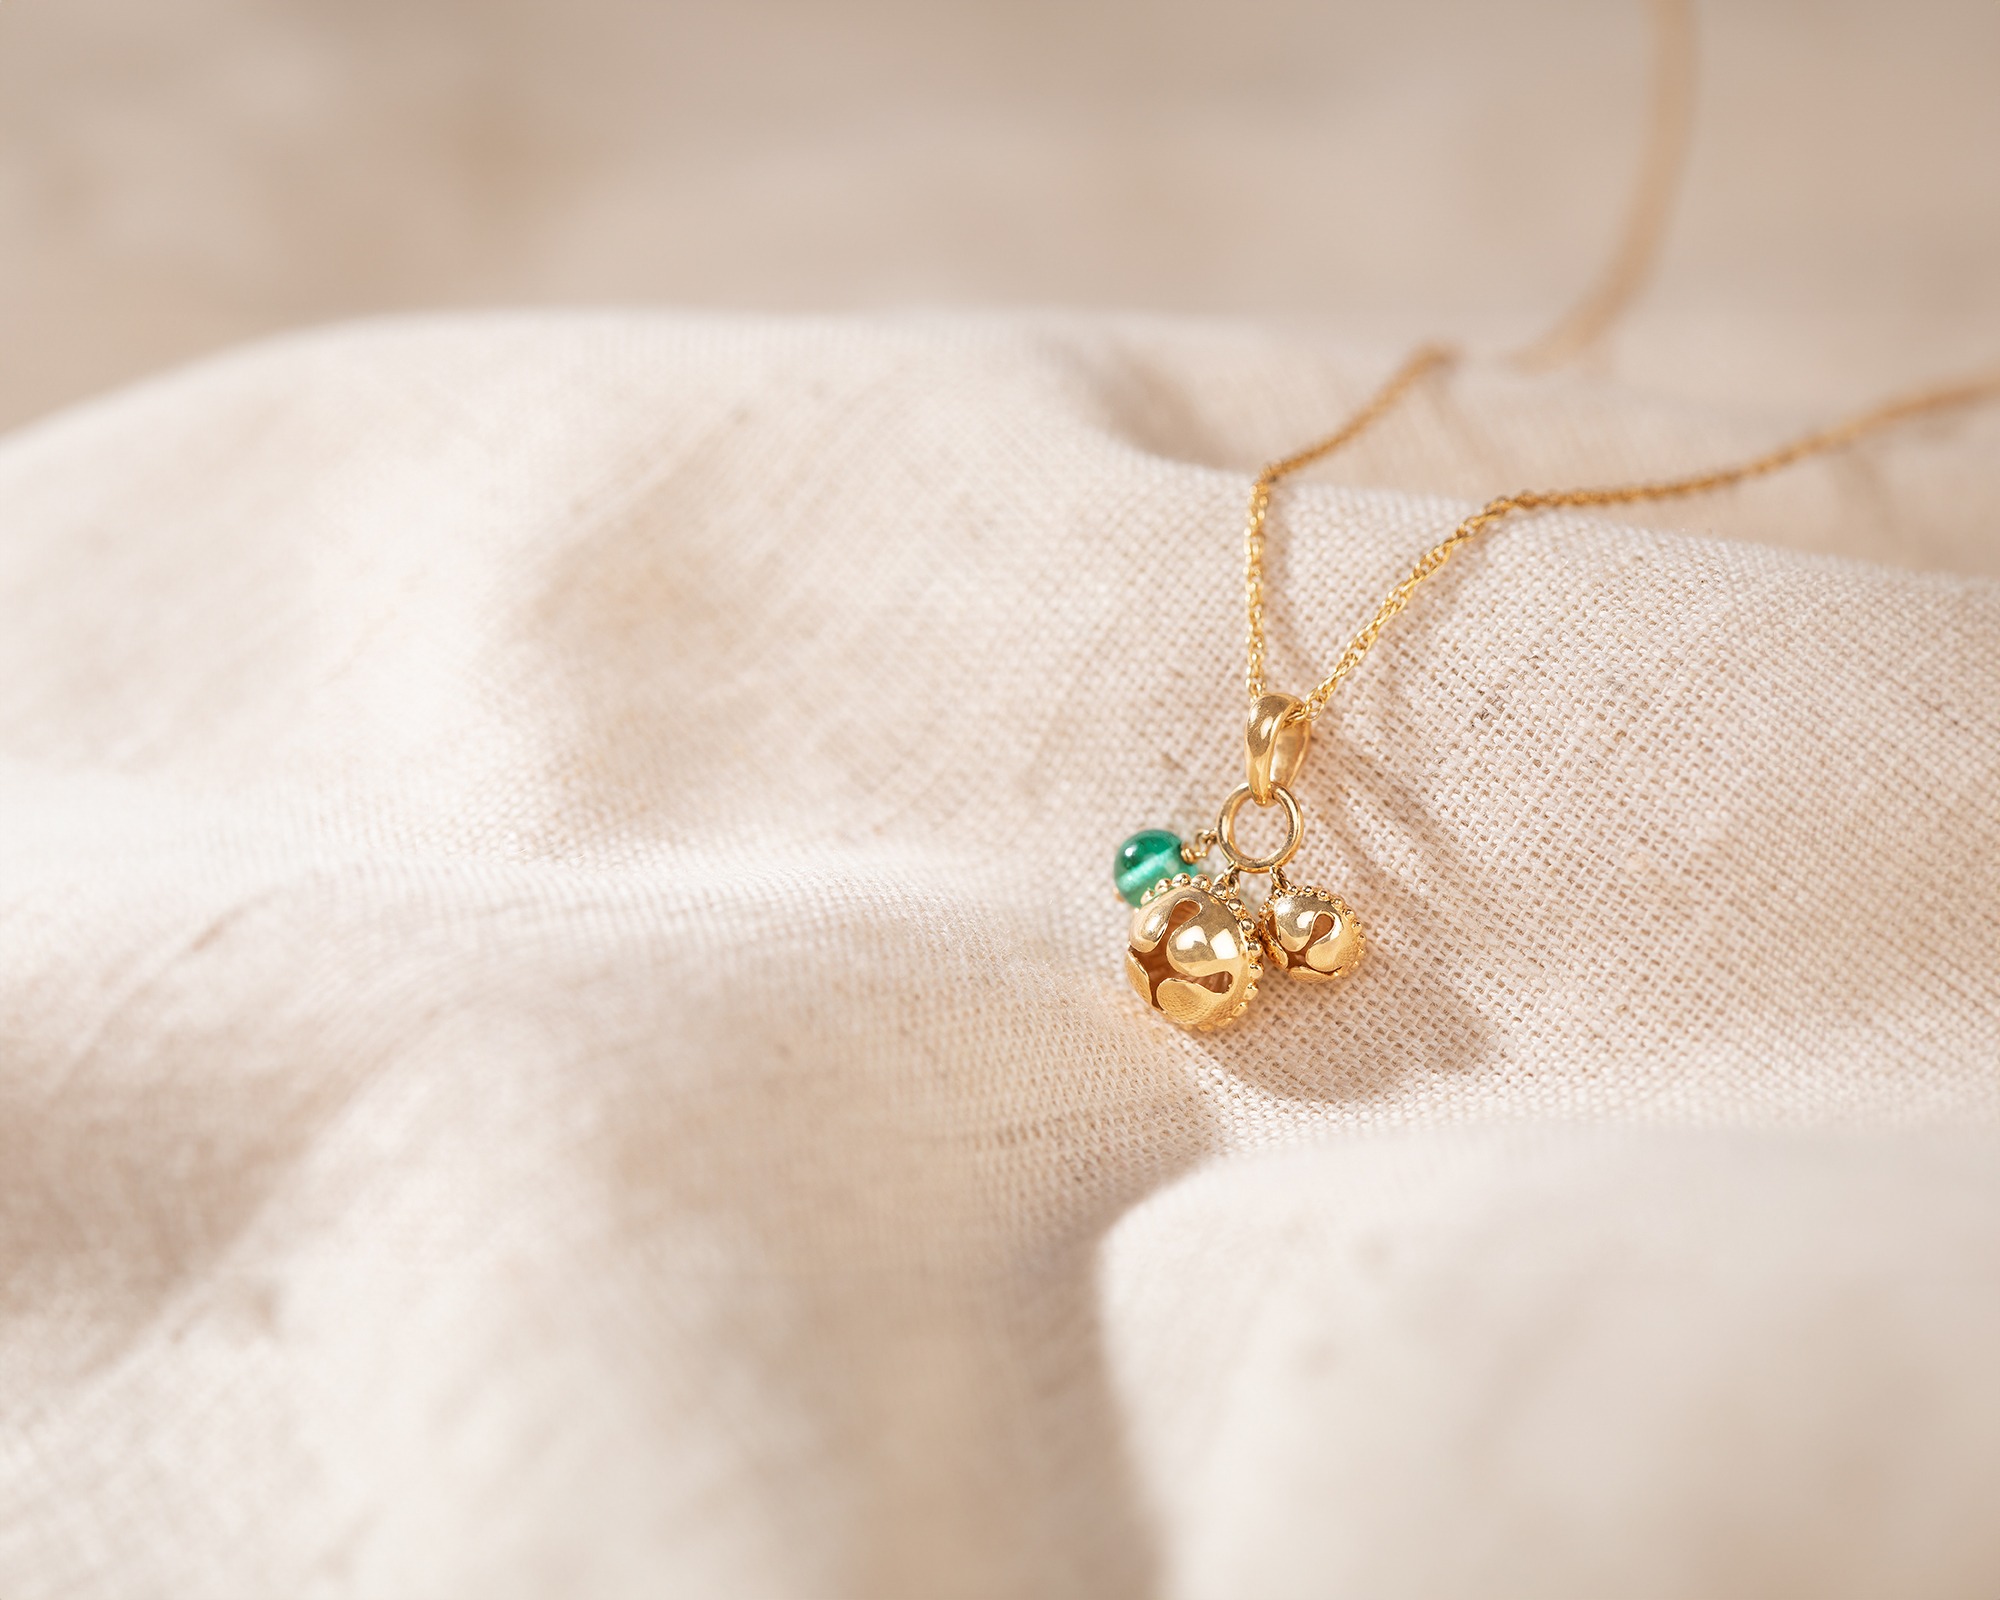 Small Pebble Pendant Necklace Gold Chain